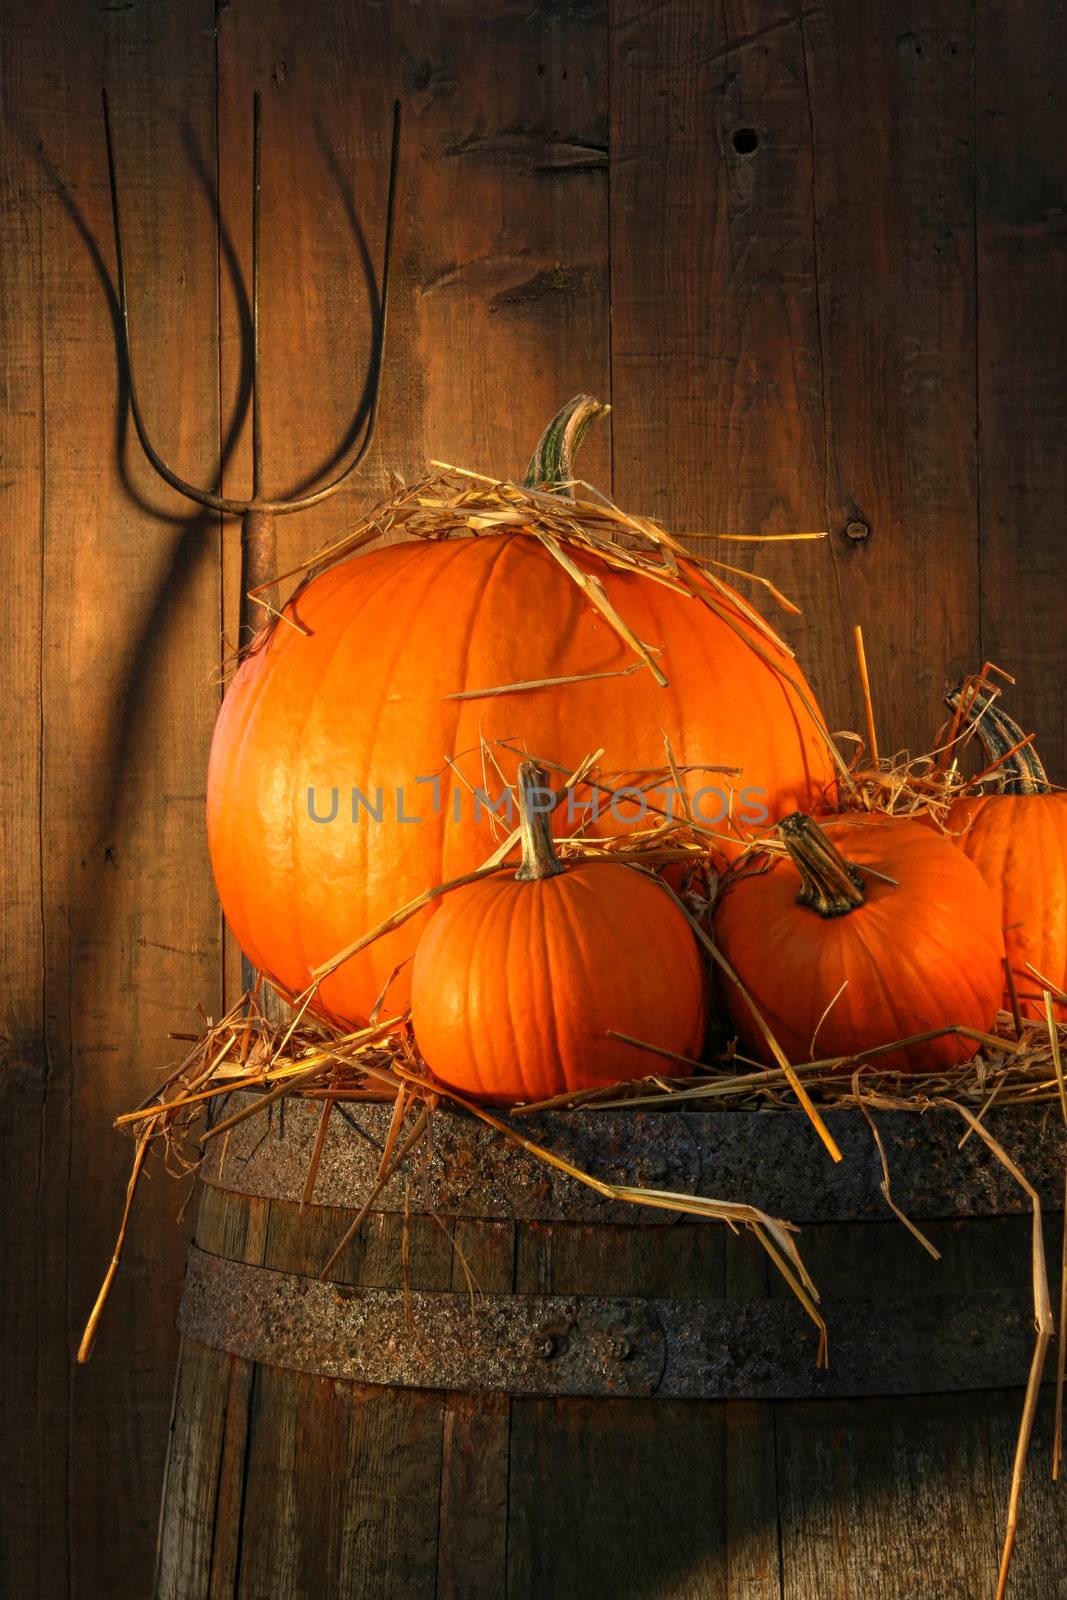 Pumpkins on wine barrel  by Sandralise